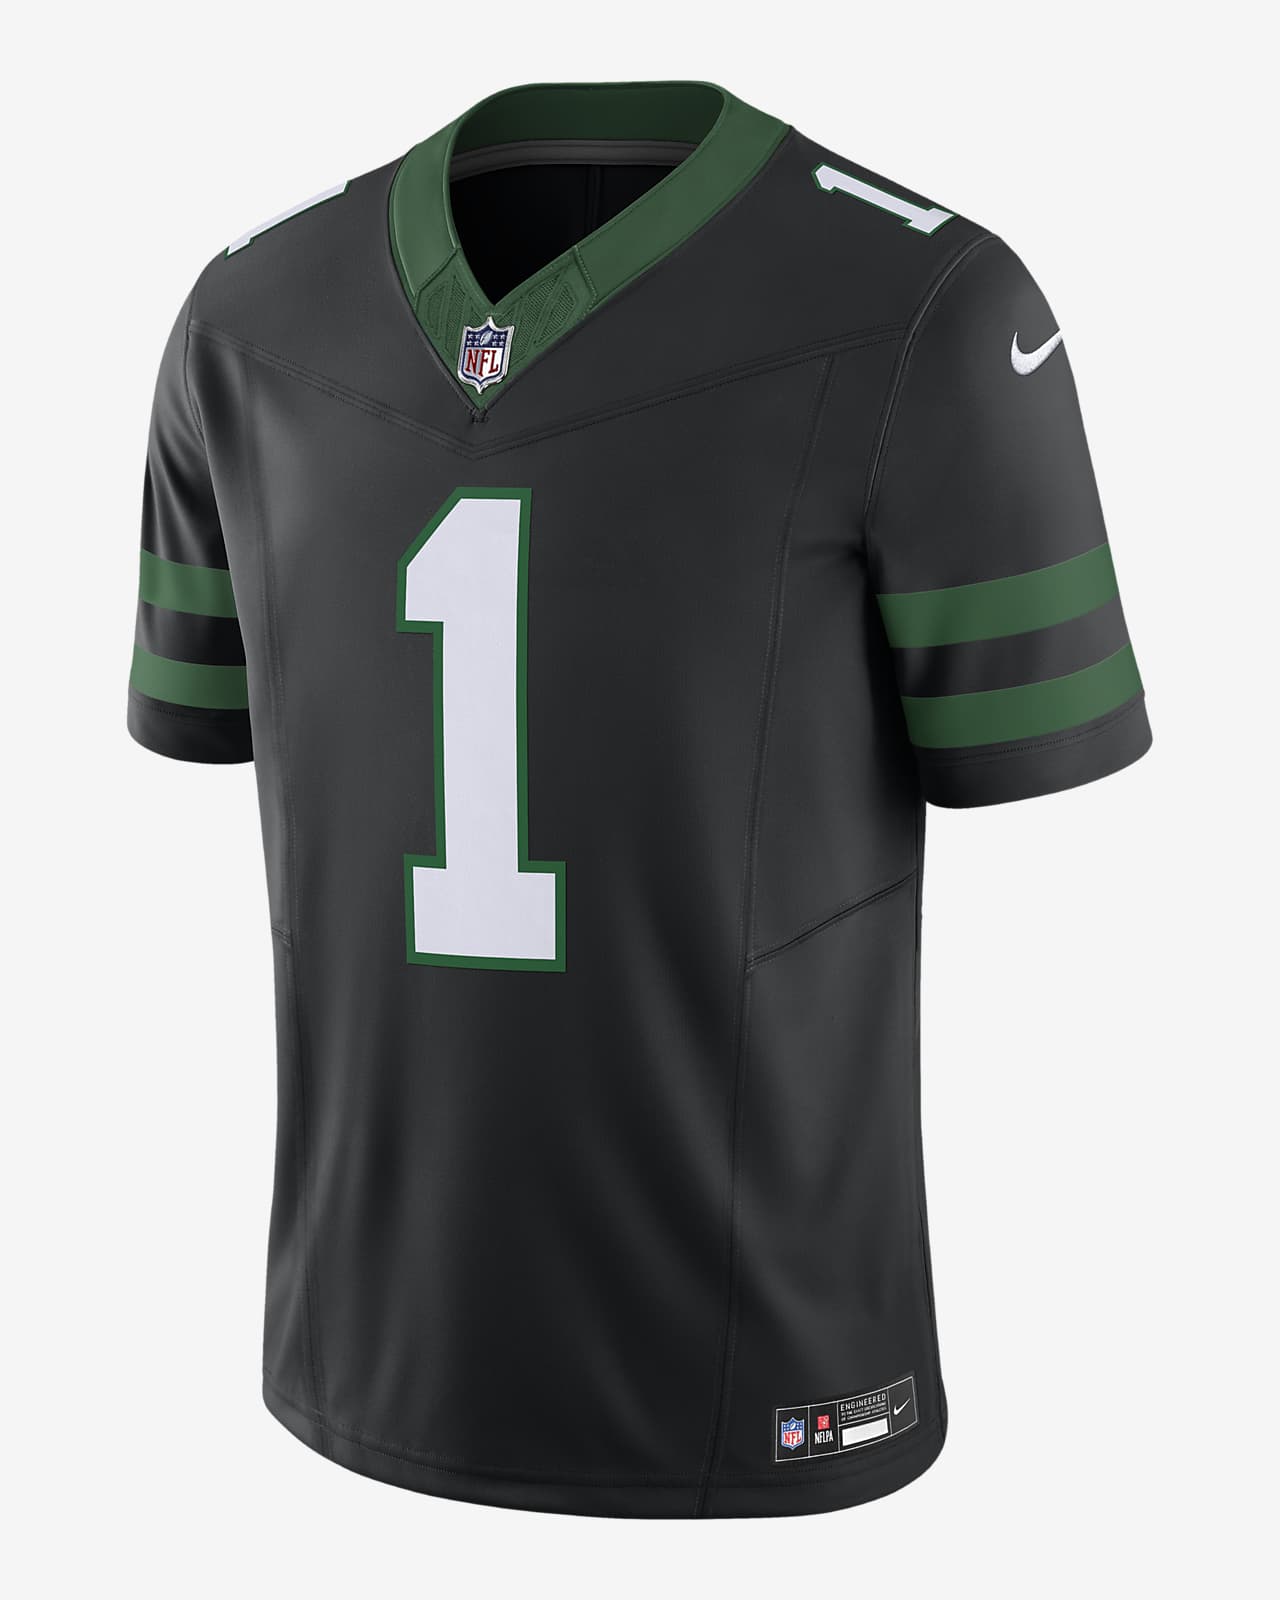 Jersey de fútbol americano Nike Dri-FIT de la NFL Limited para hombre Sauce Gardner New York Jets